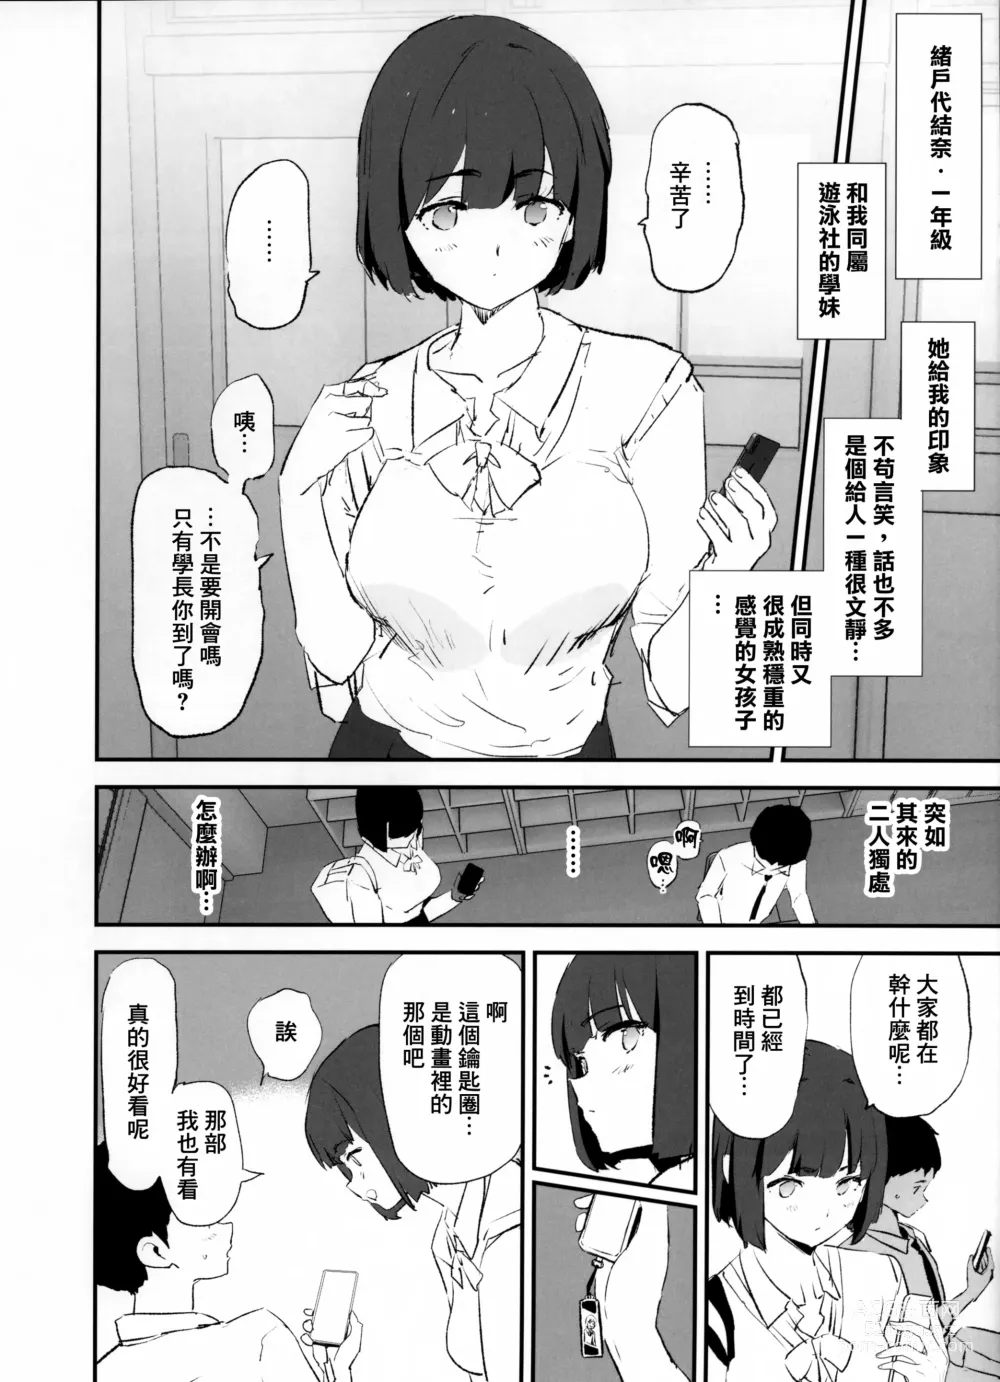 Page 4 of doujinshi 唯獨沒有叫上我的飛機杯合宿 + 紗季學姐